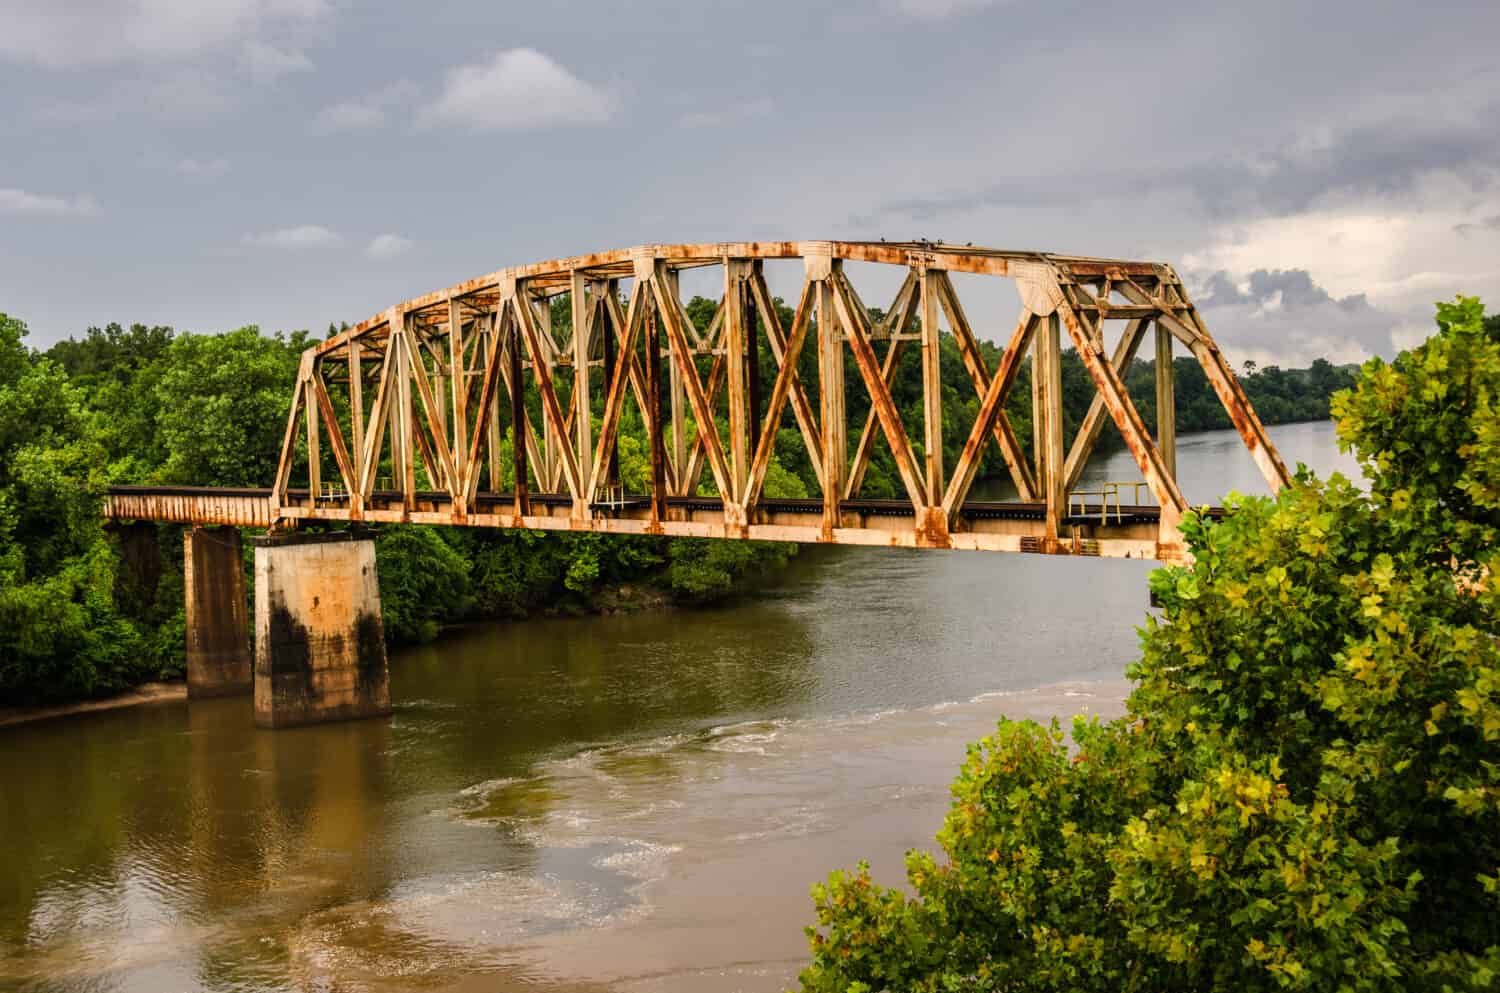 Rusty old railroad bridge spans the Chattahoochee River on the Georgia/Alabama border